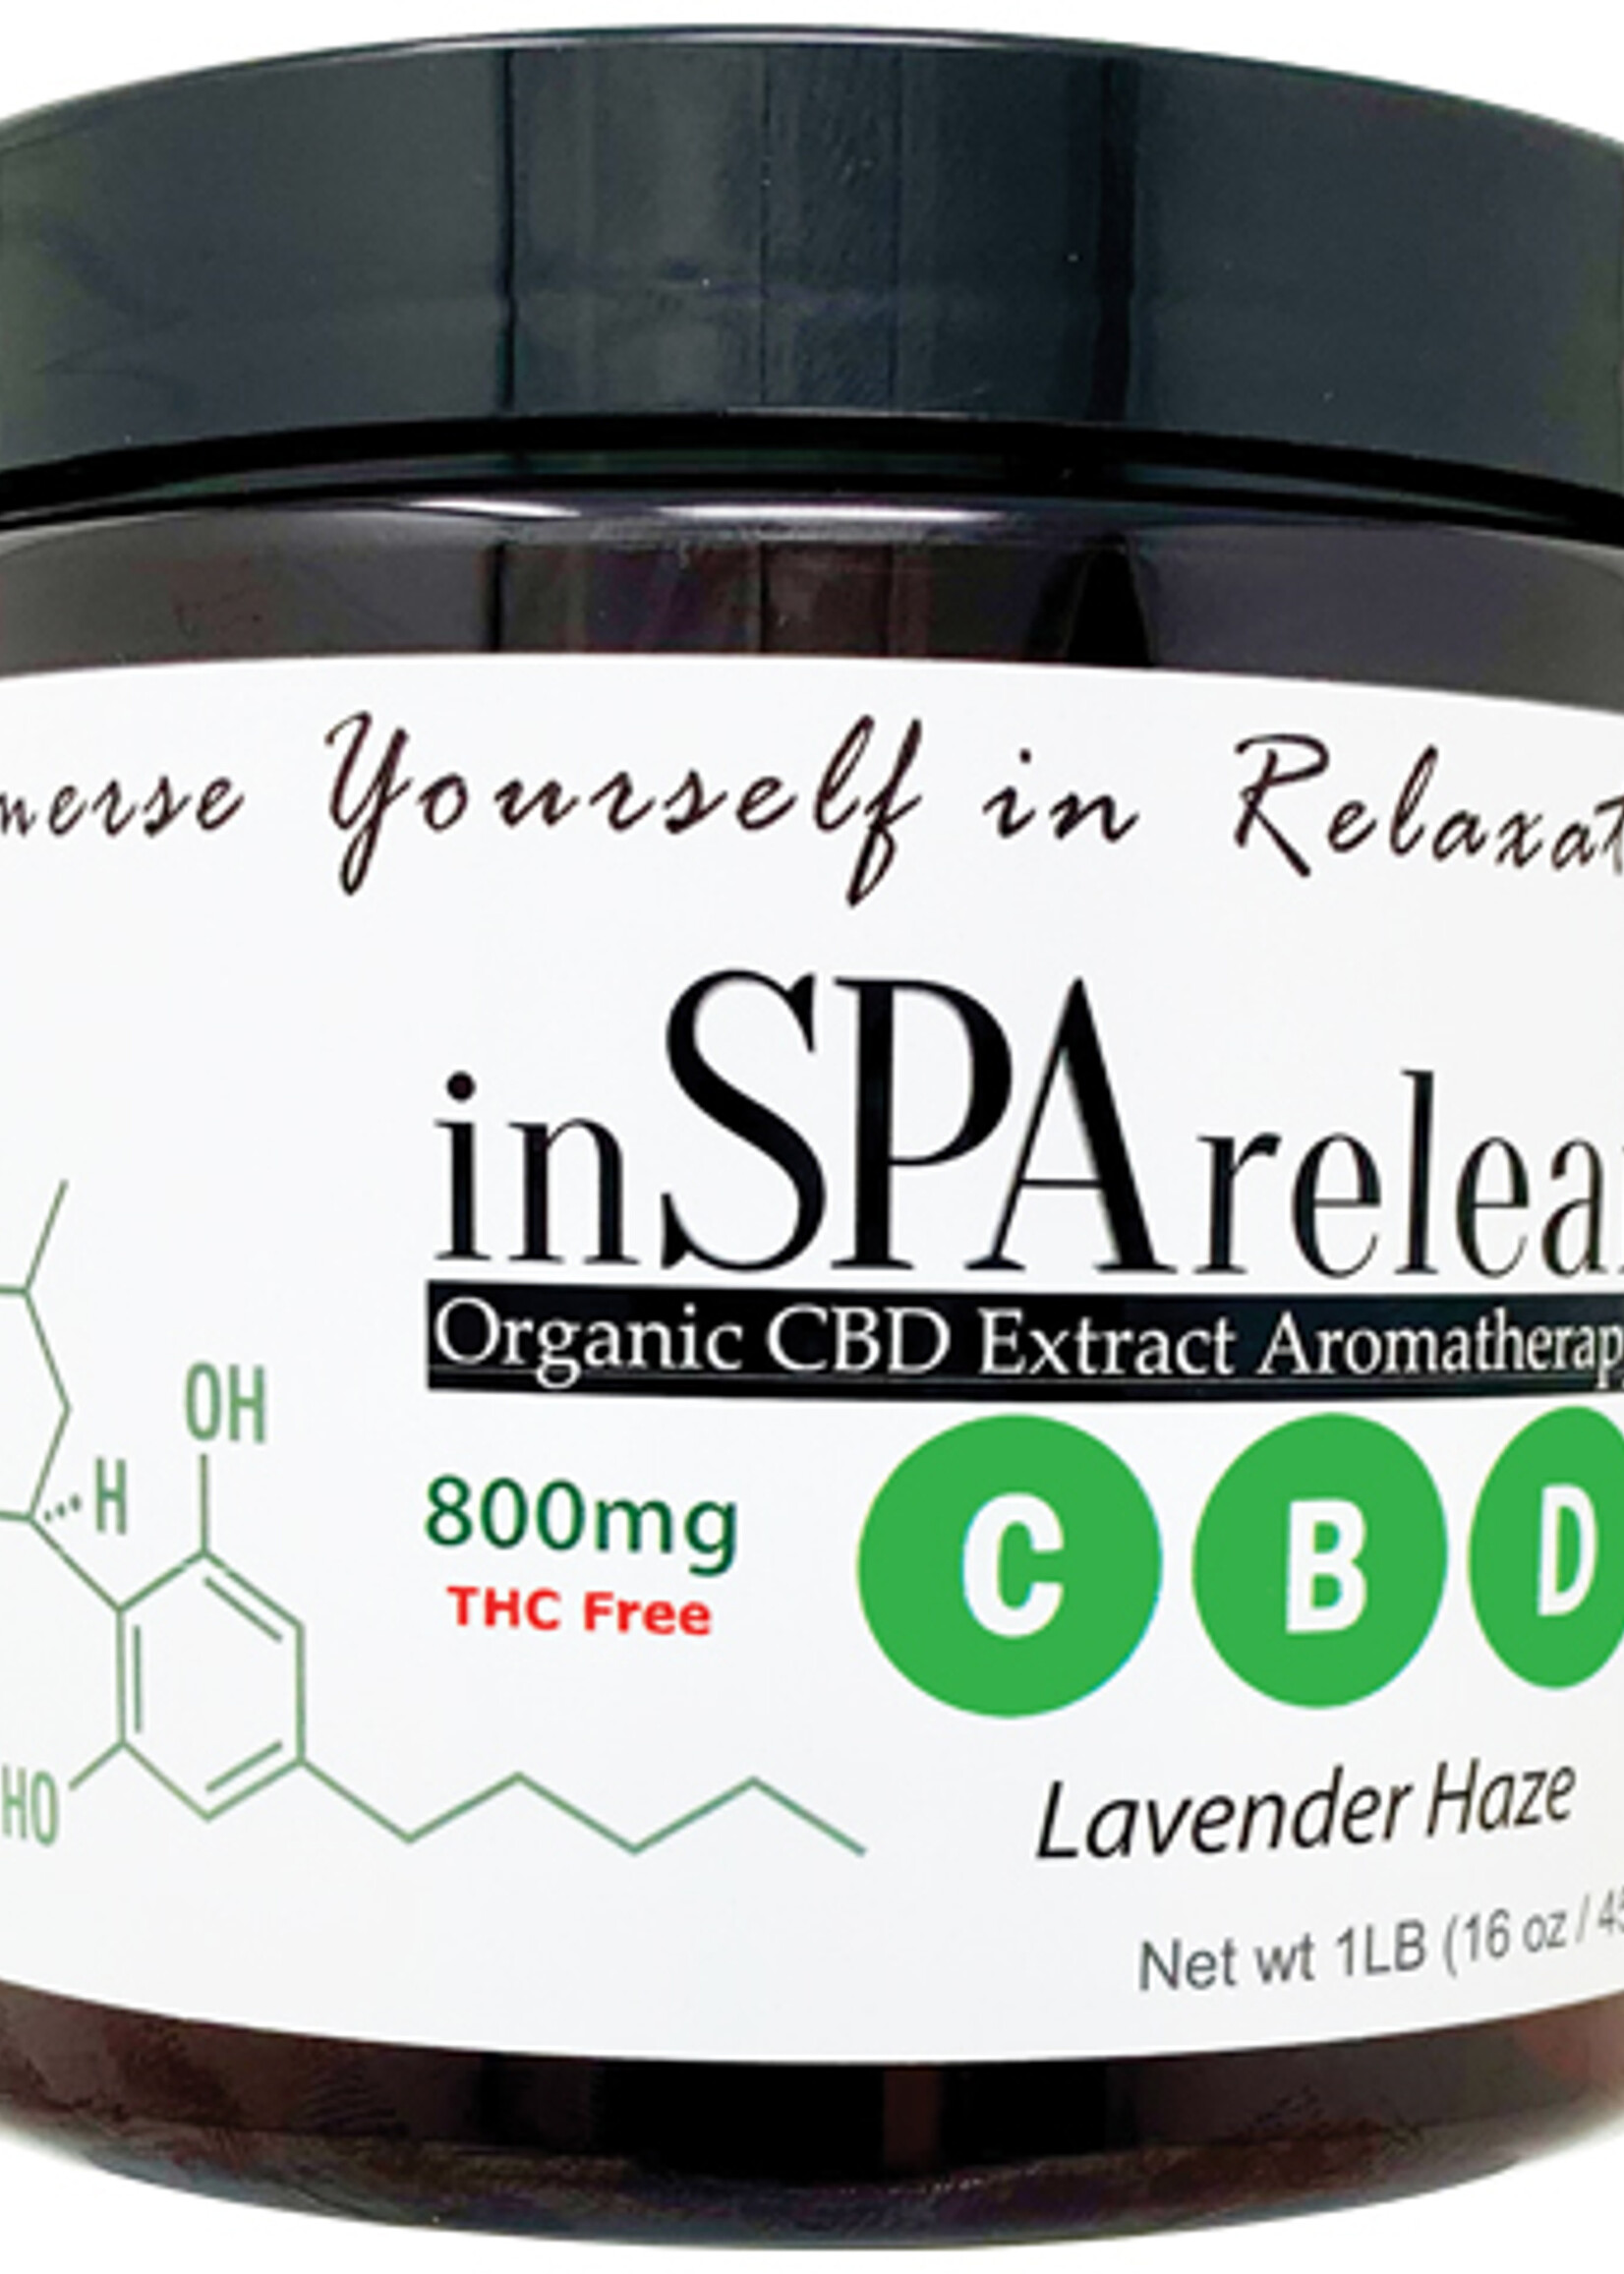 In Spa Relief CBD extract aromatherapy 16oz Lavender Haze